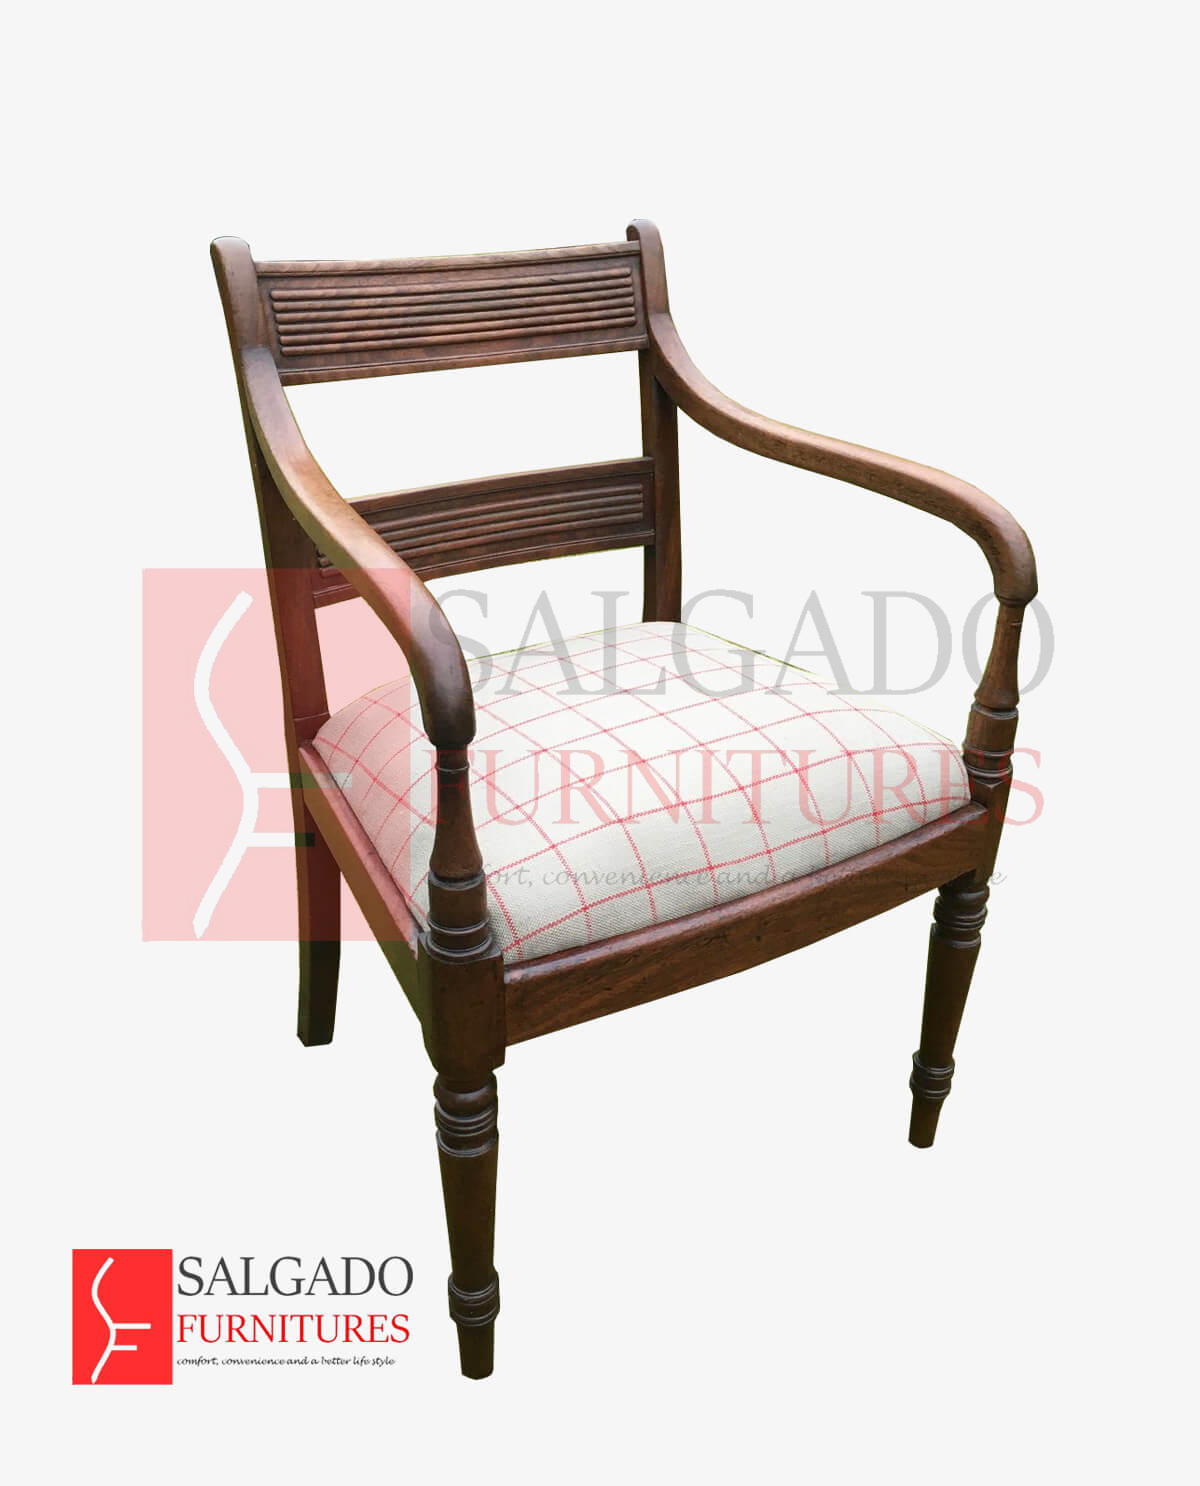 Hubert-Varandha-Chair-Srilanka-Teak-Furniture